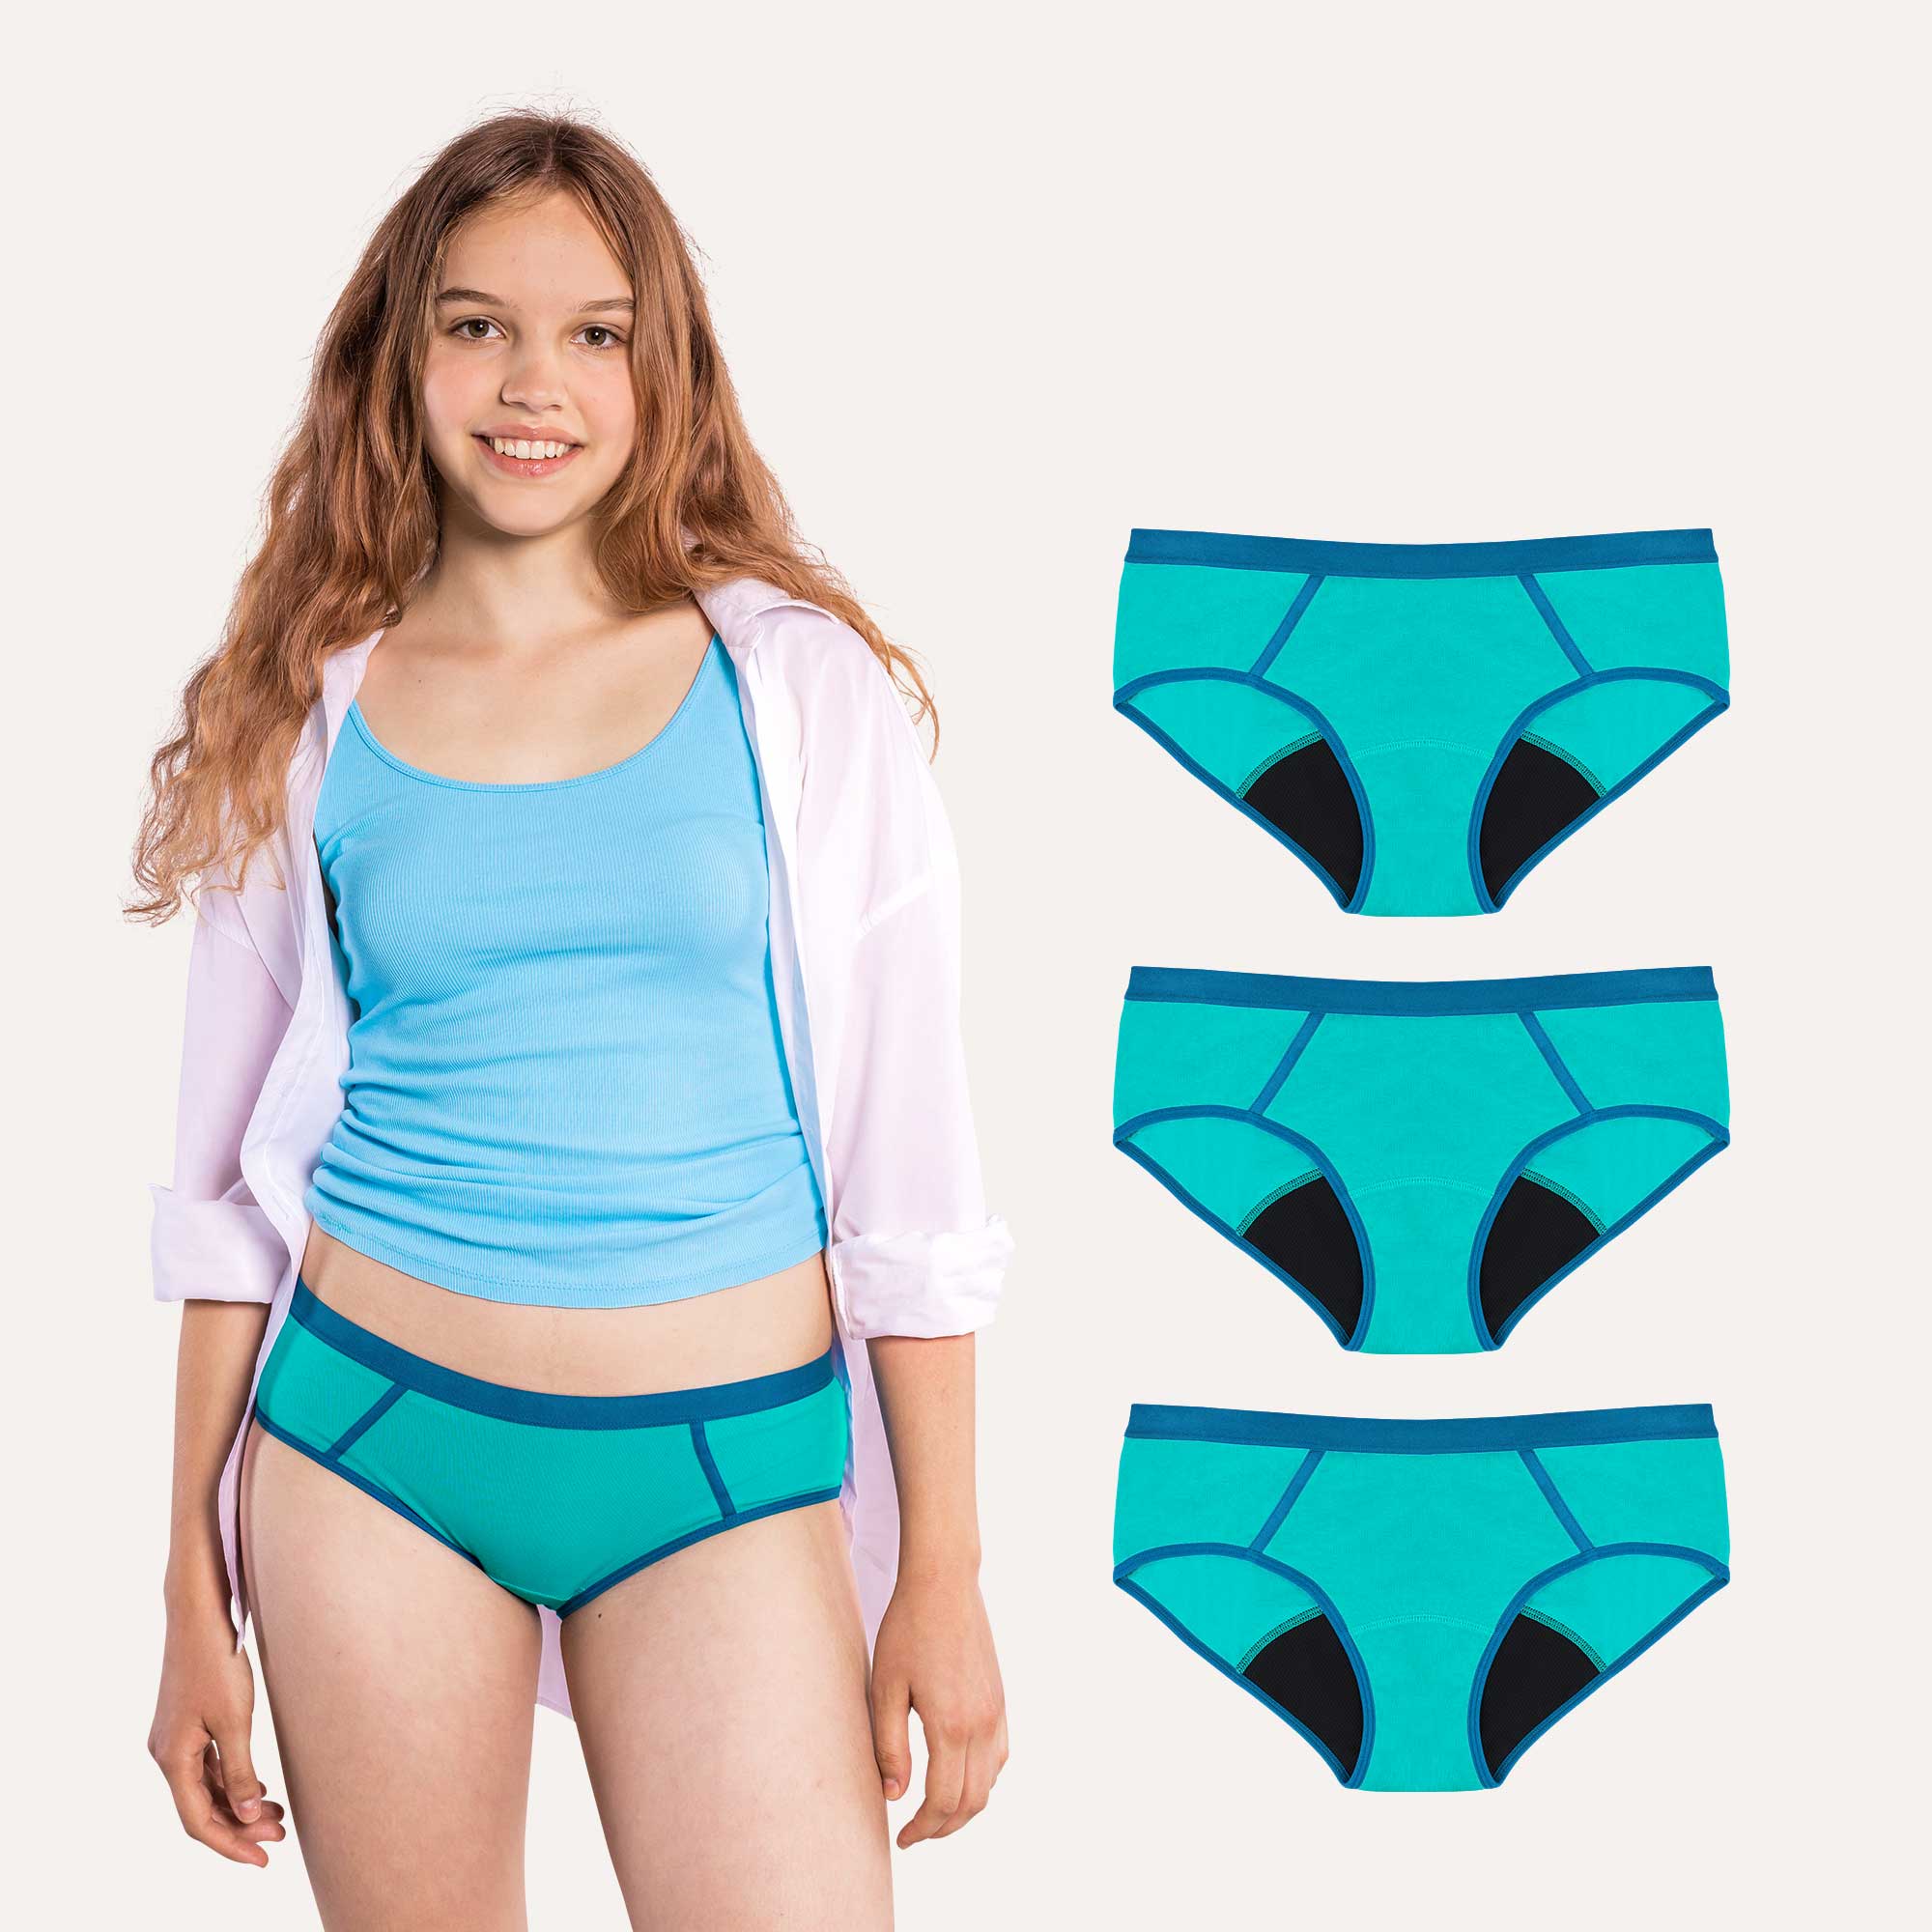 Sustainable Teen Period Underwear